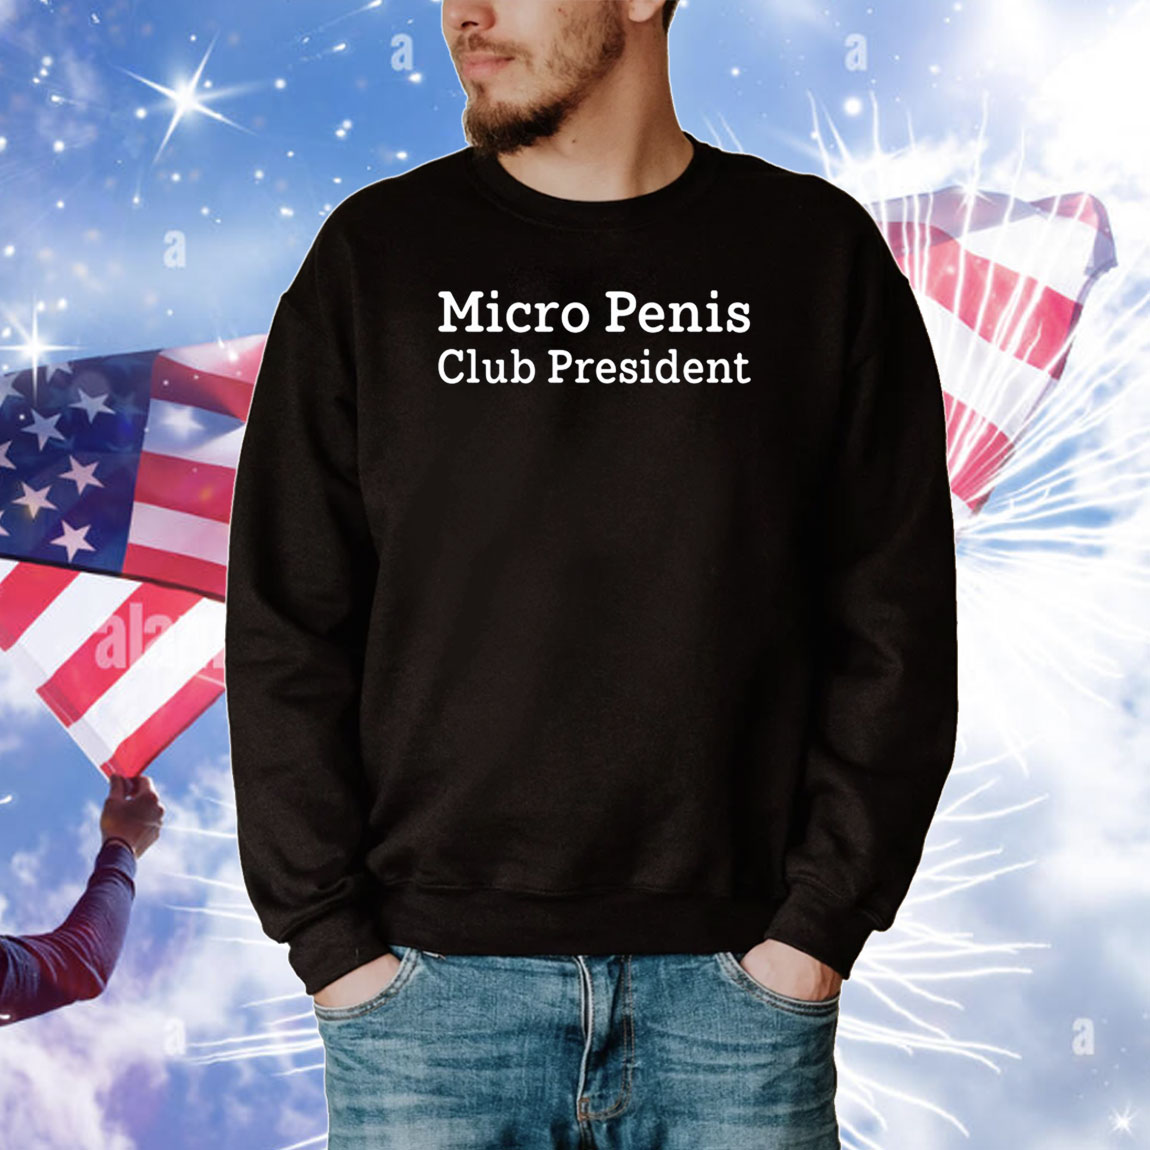 Micro Penis Club President Tee Shirts